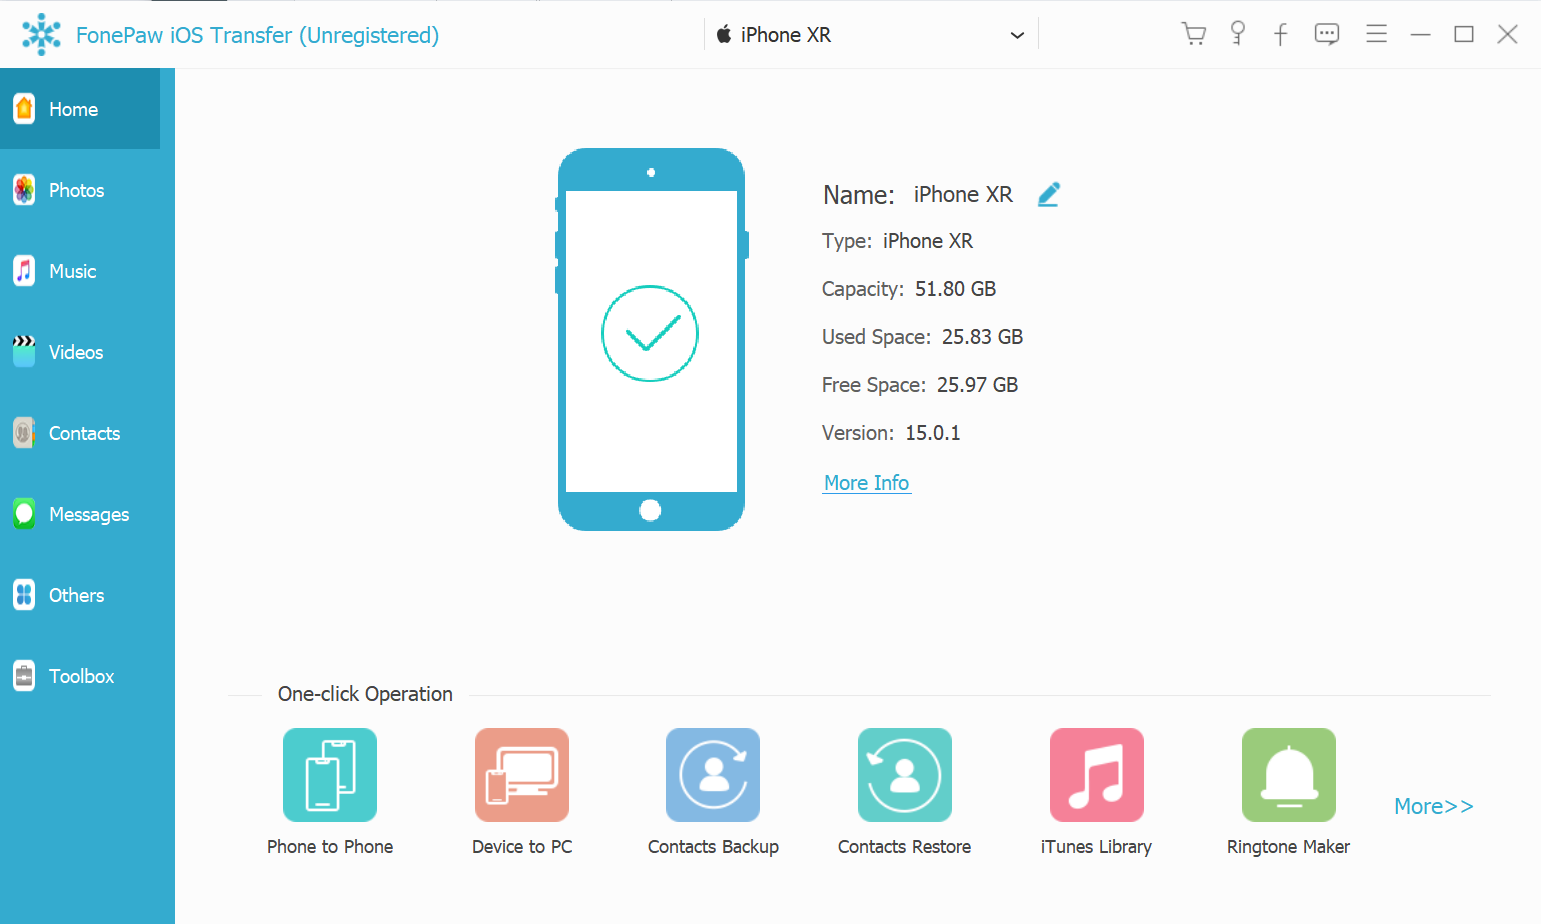 instal the new version for ios FonePaw iOS Transfer 6.0.0